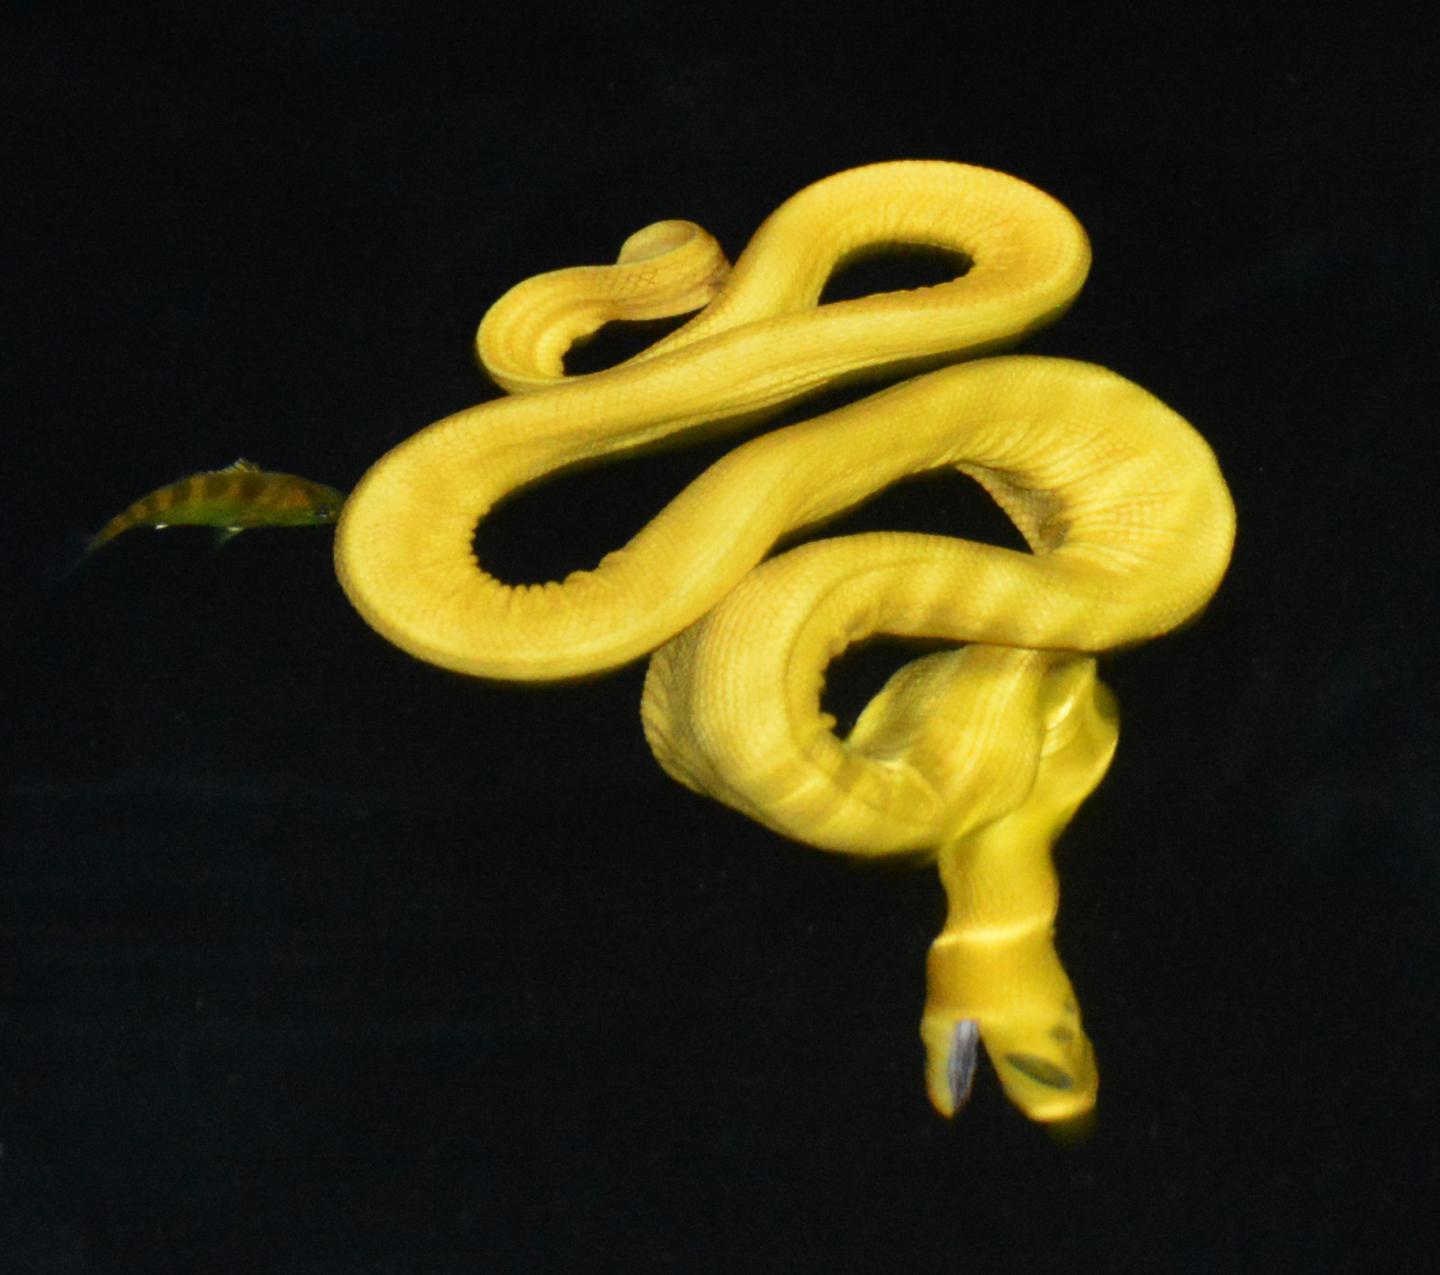 Ambush Posture of the New Yellow Sea Snake Subspecies Floating at the Sea Surface at Night